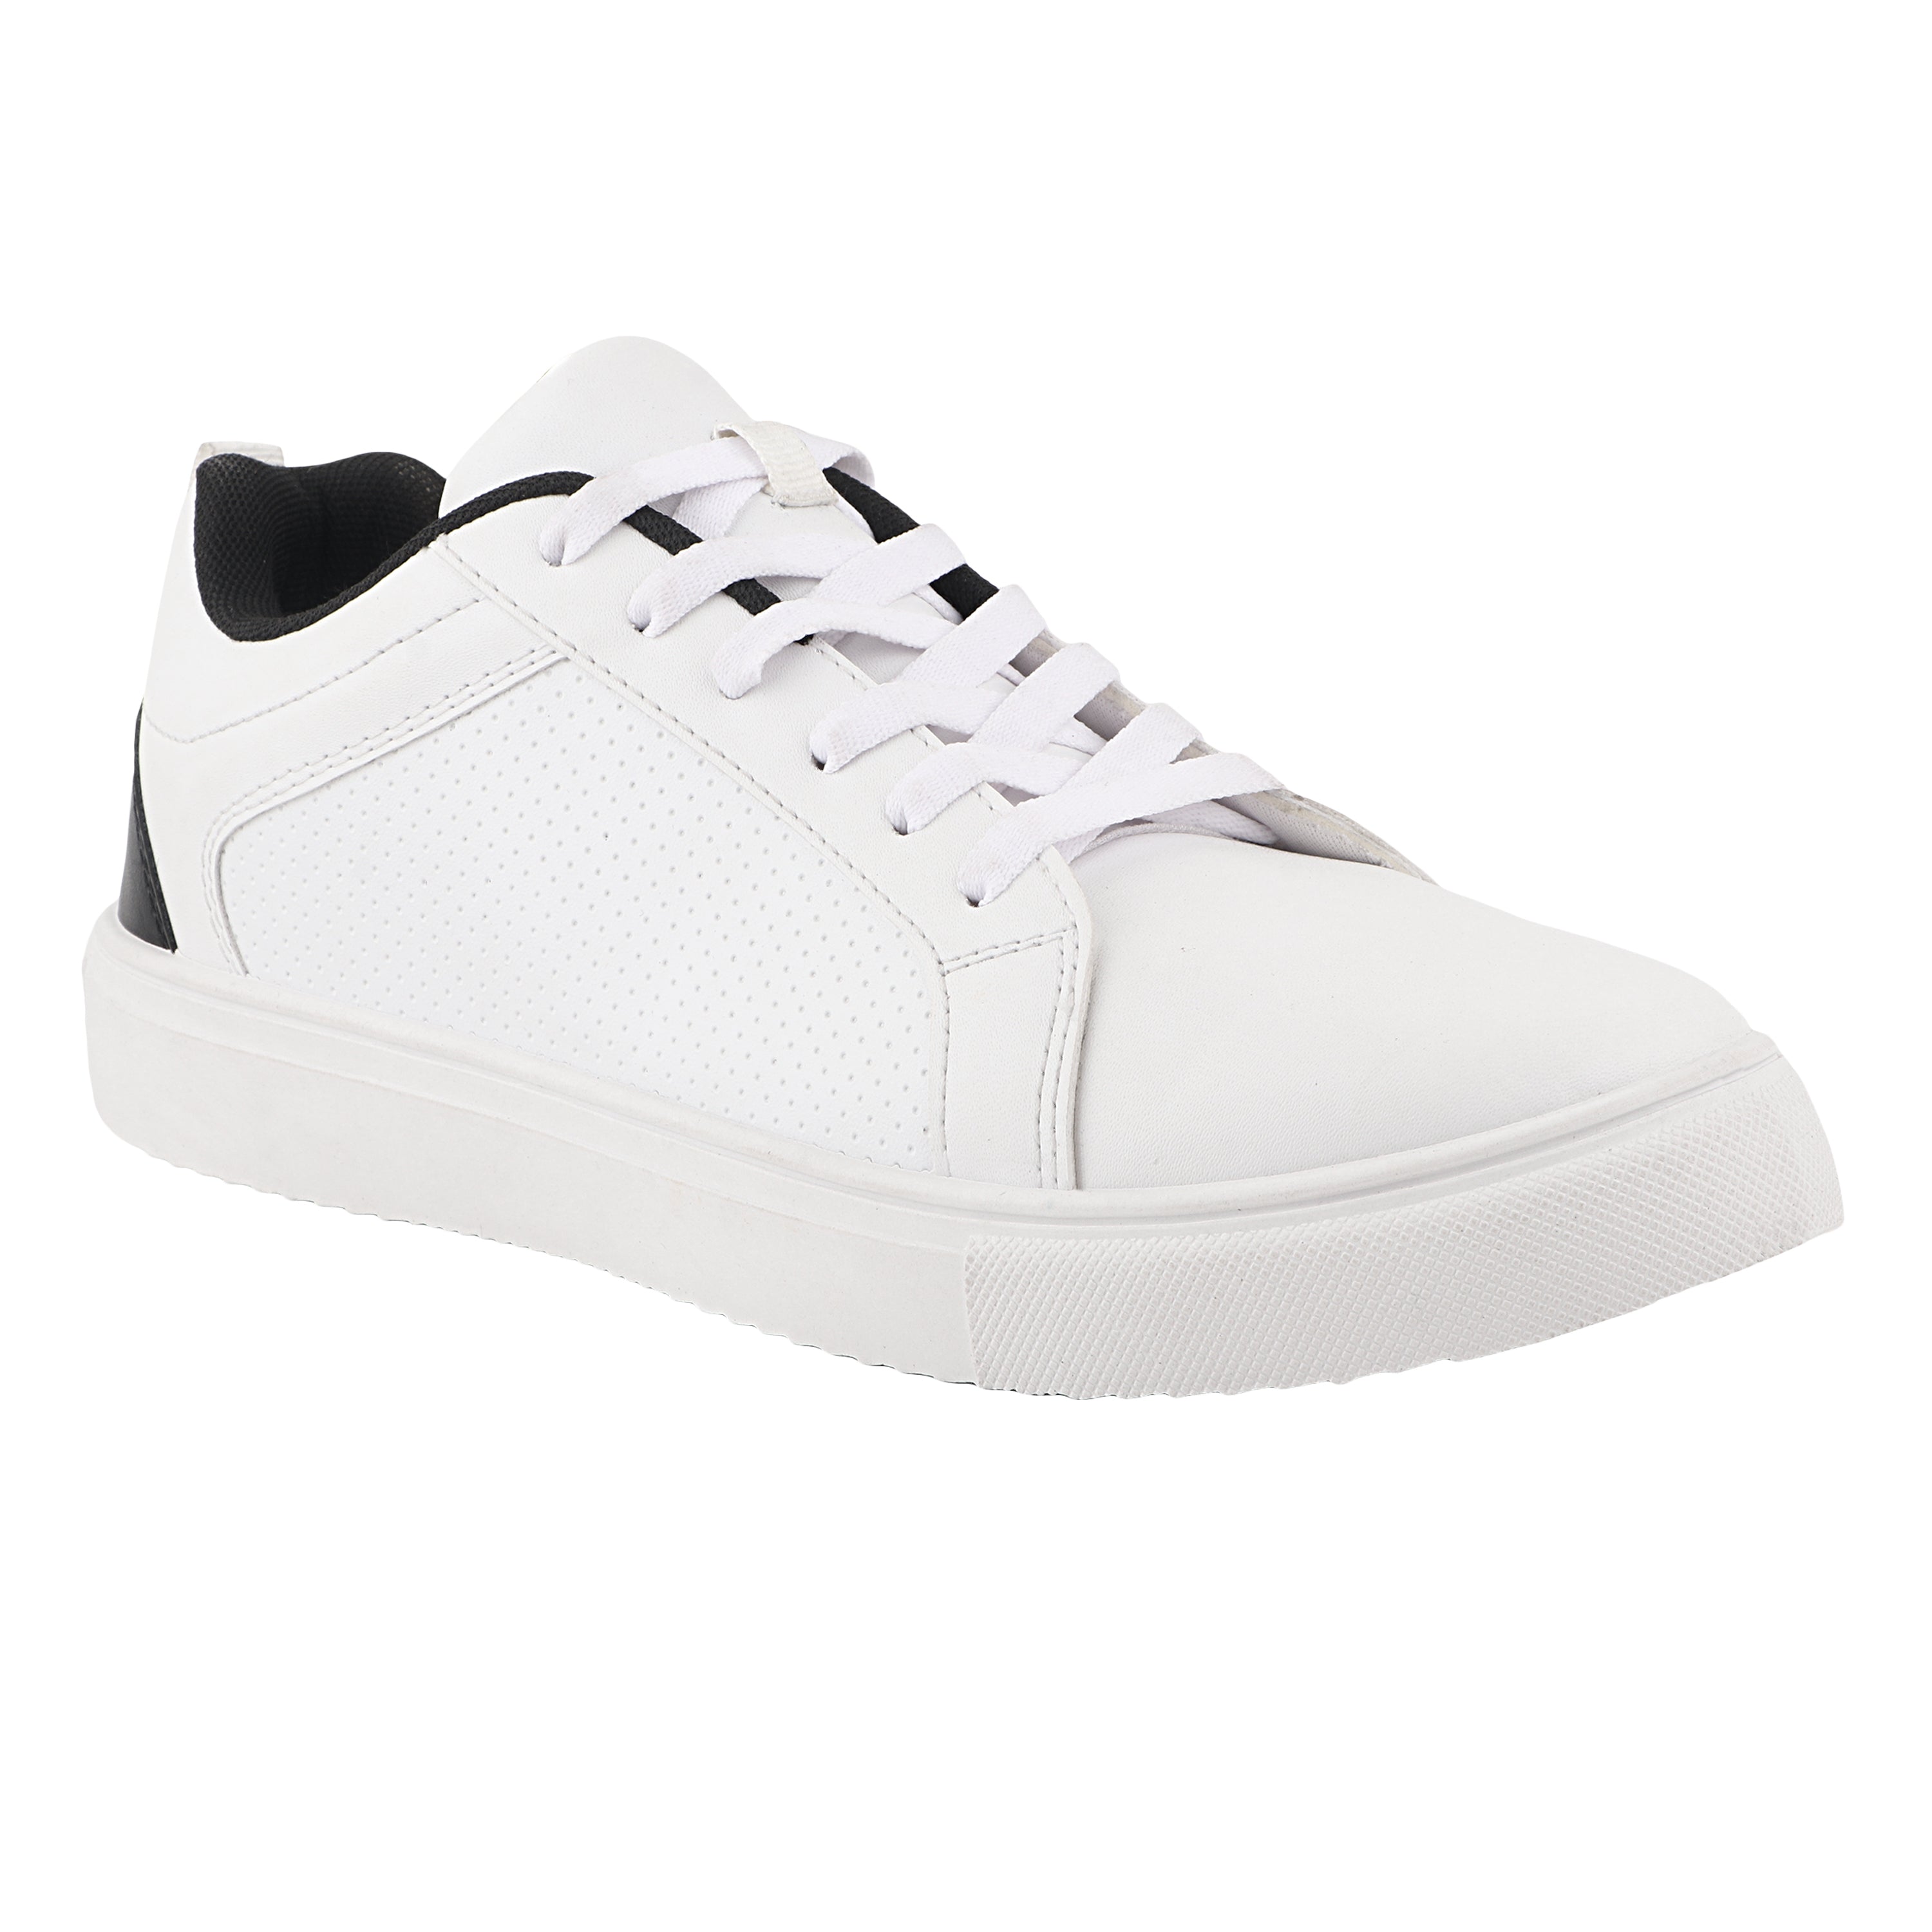 Sneak sneakers white